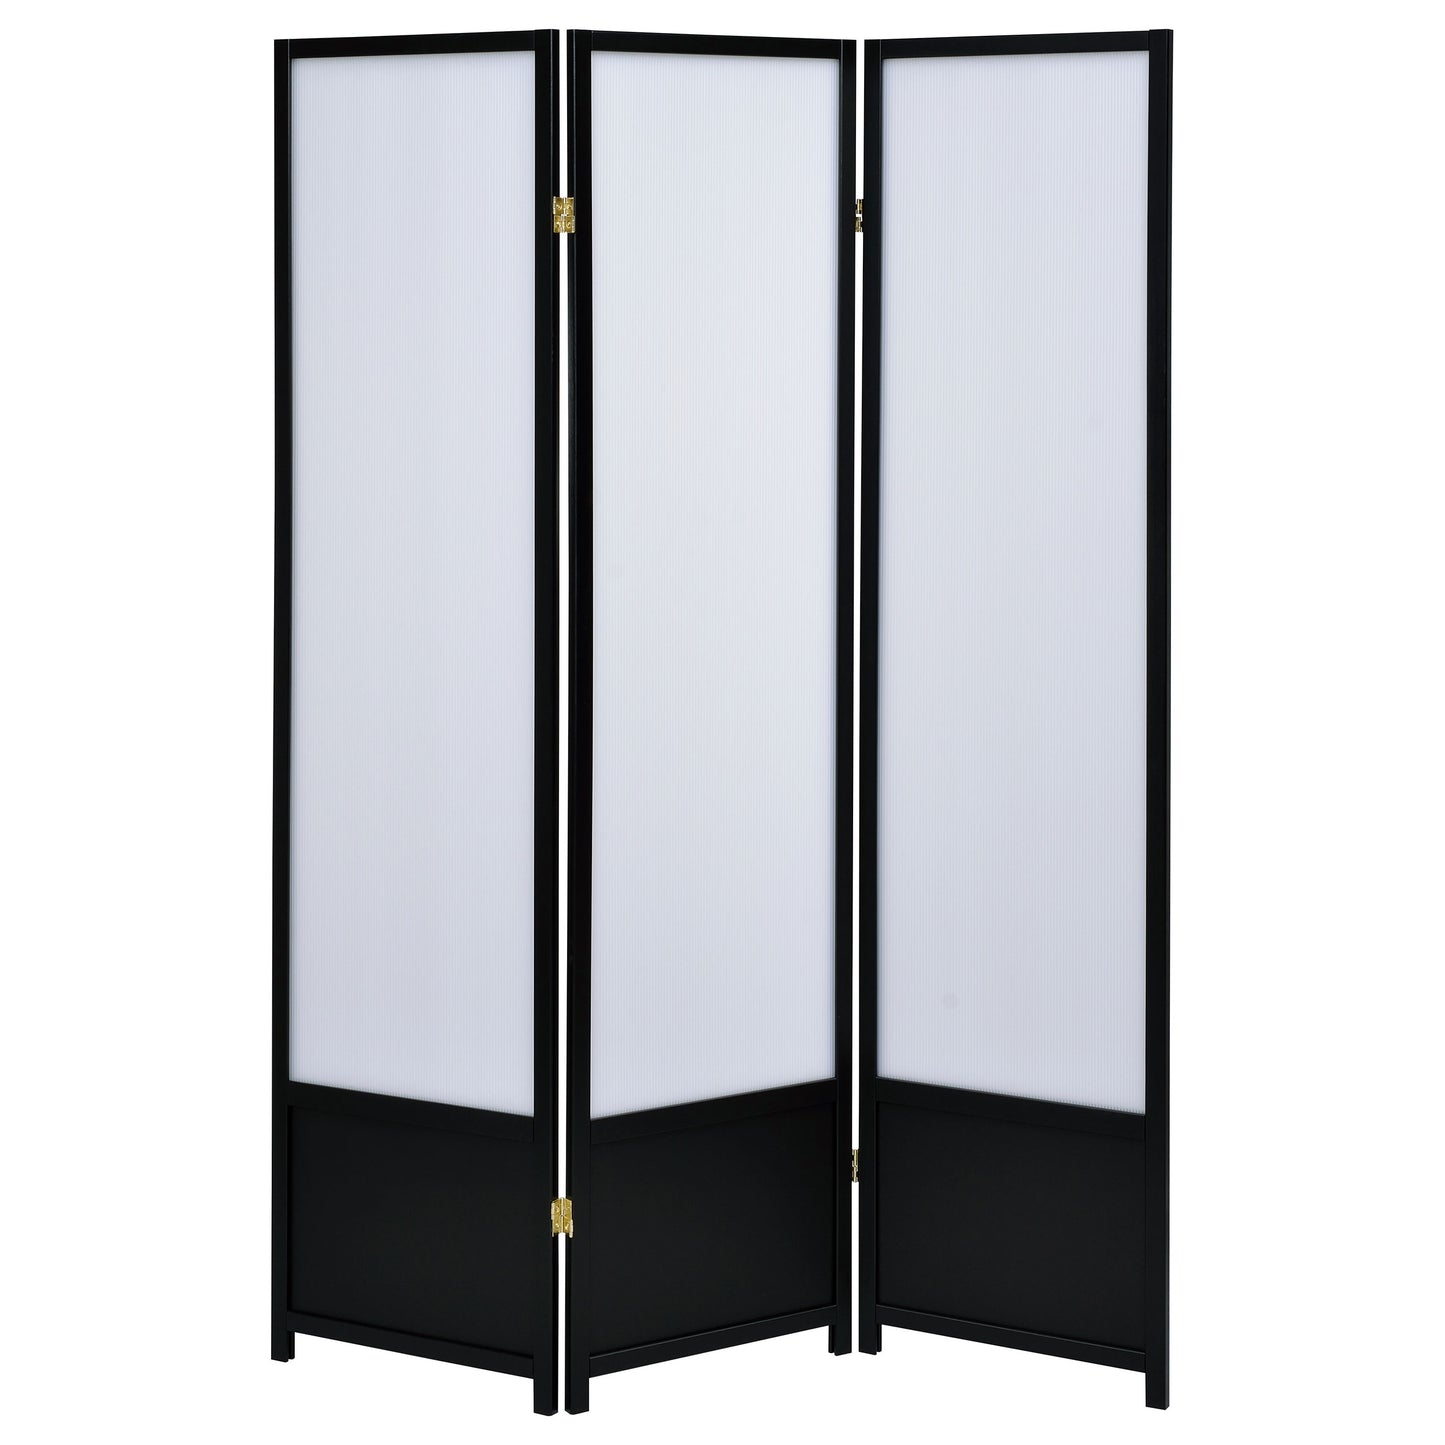 Calix 3-panel Folding Floor Screen Translucent and Black